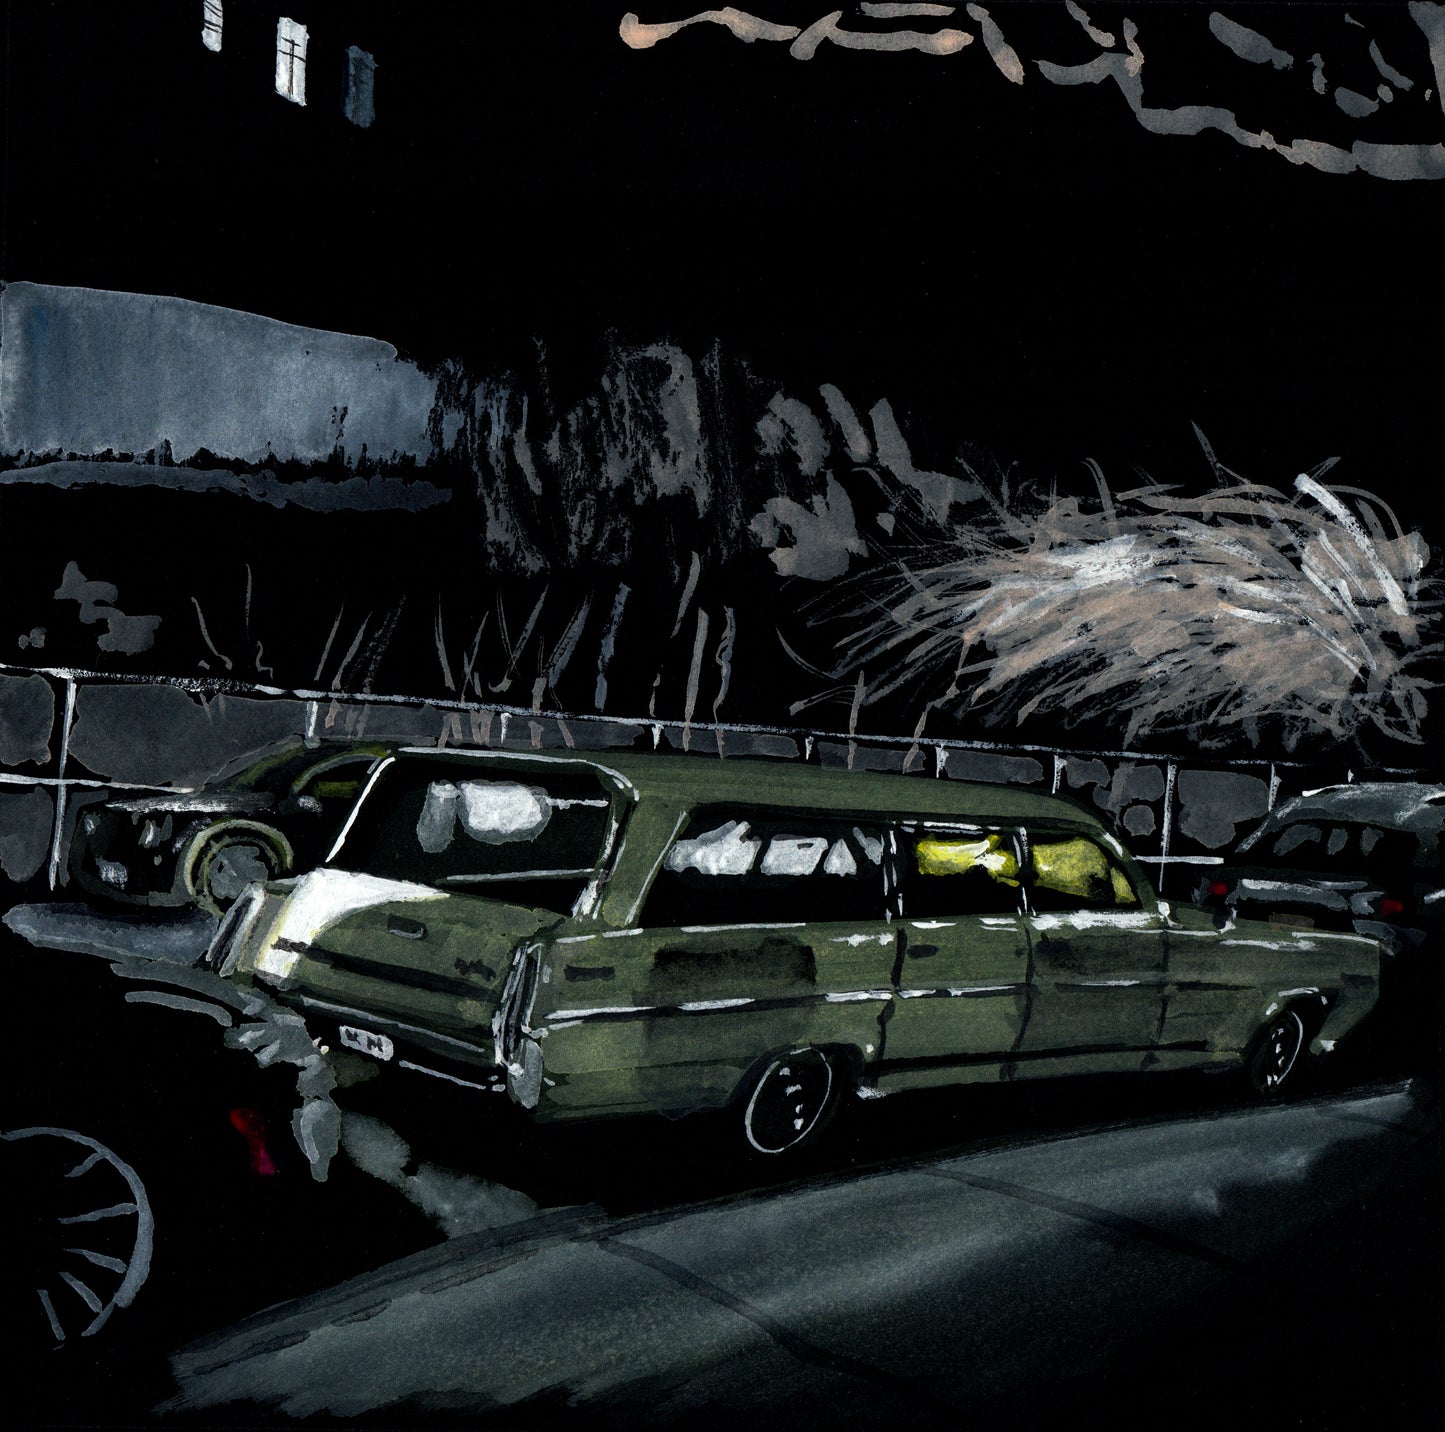 Pontiac Catalina, Street Scene, Classic Car, Gouache on Black Paper, Original Painting